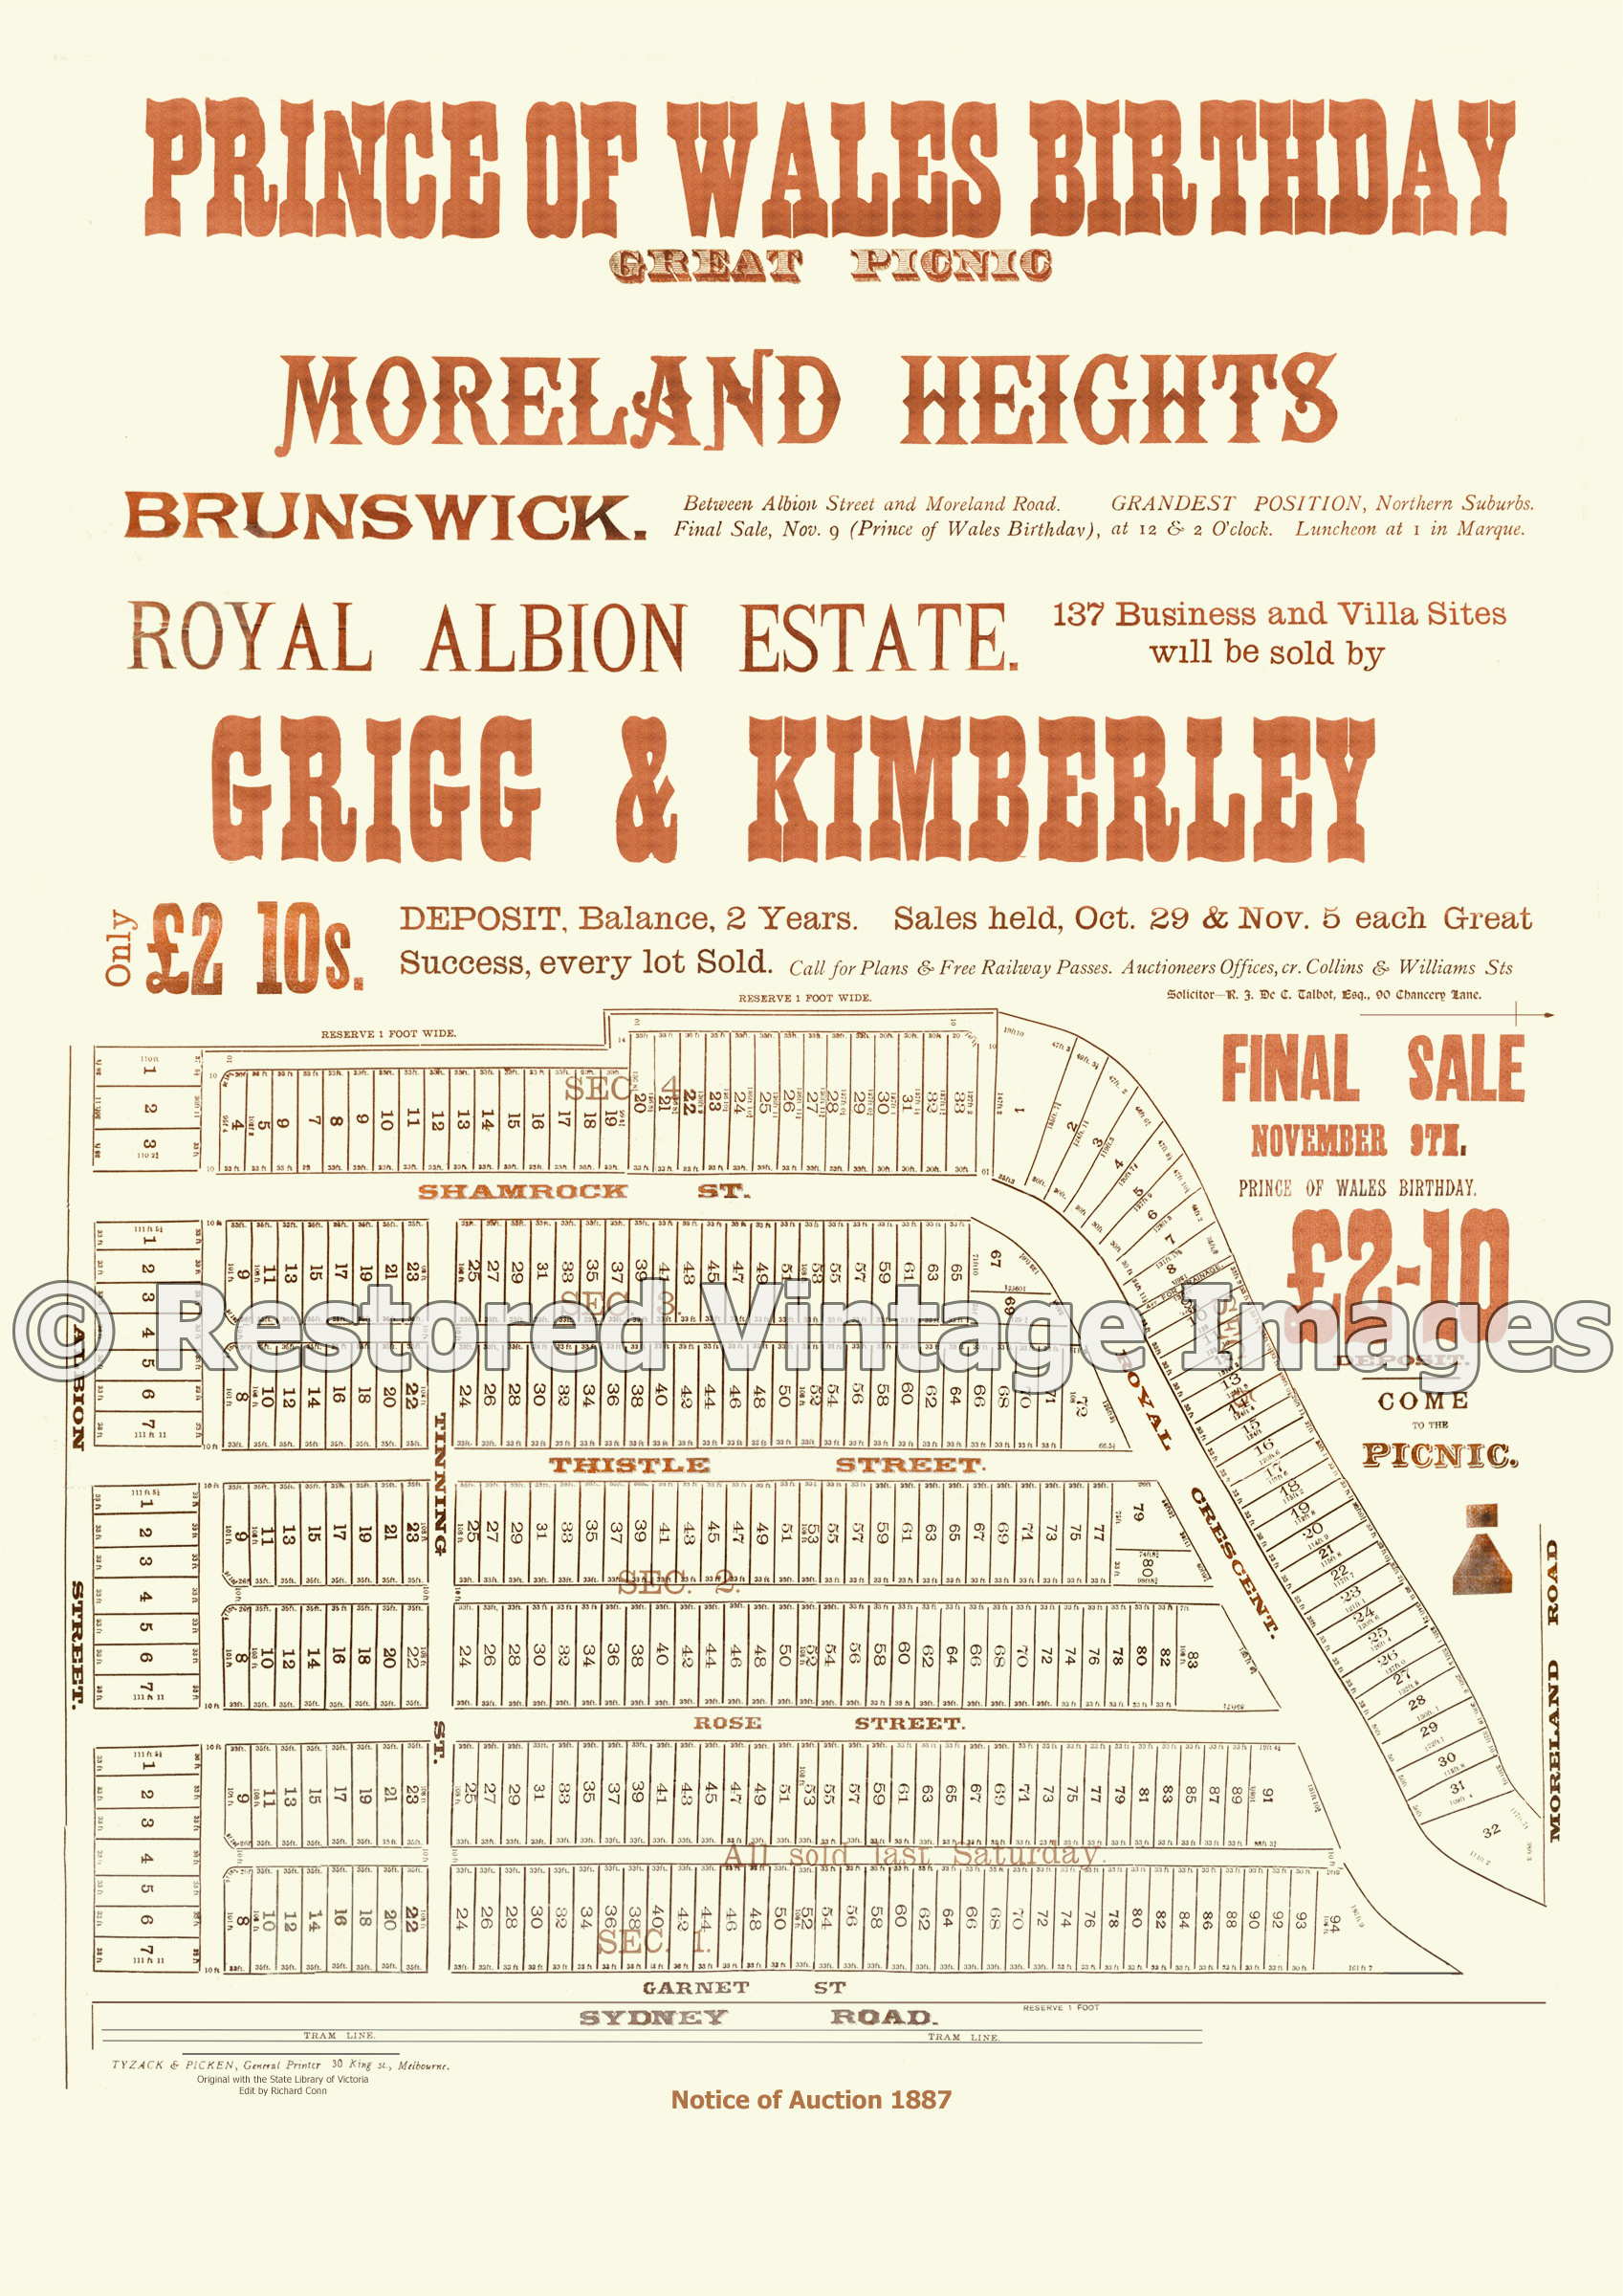 Royal Albion Estate Moreland Heights 9th November 1887 – Brunswick